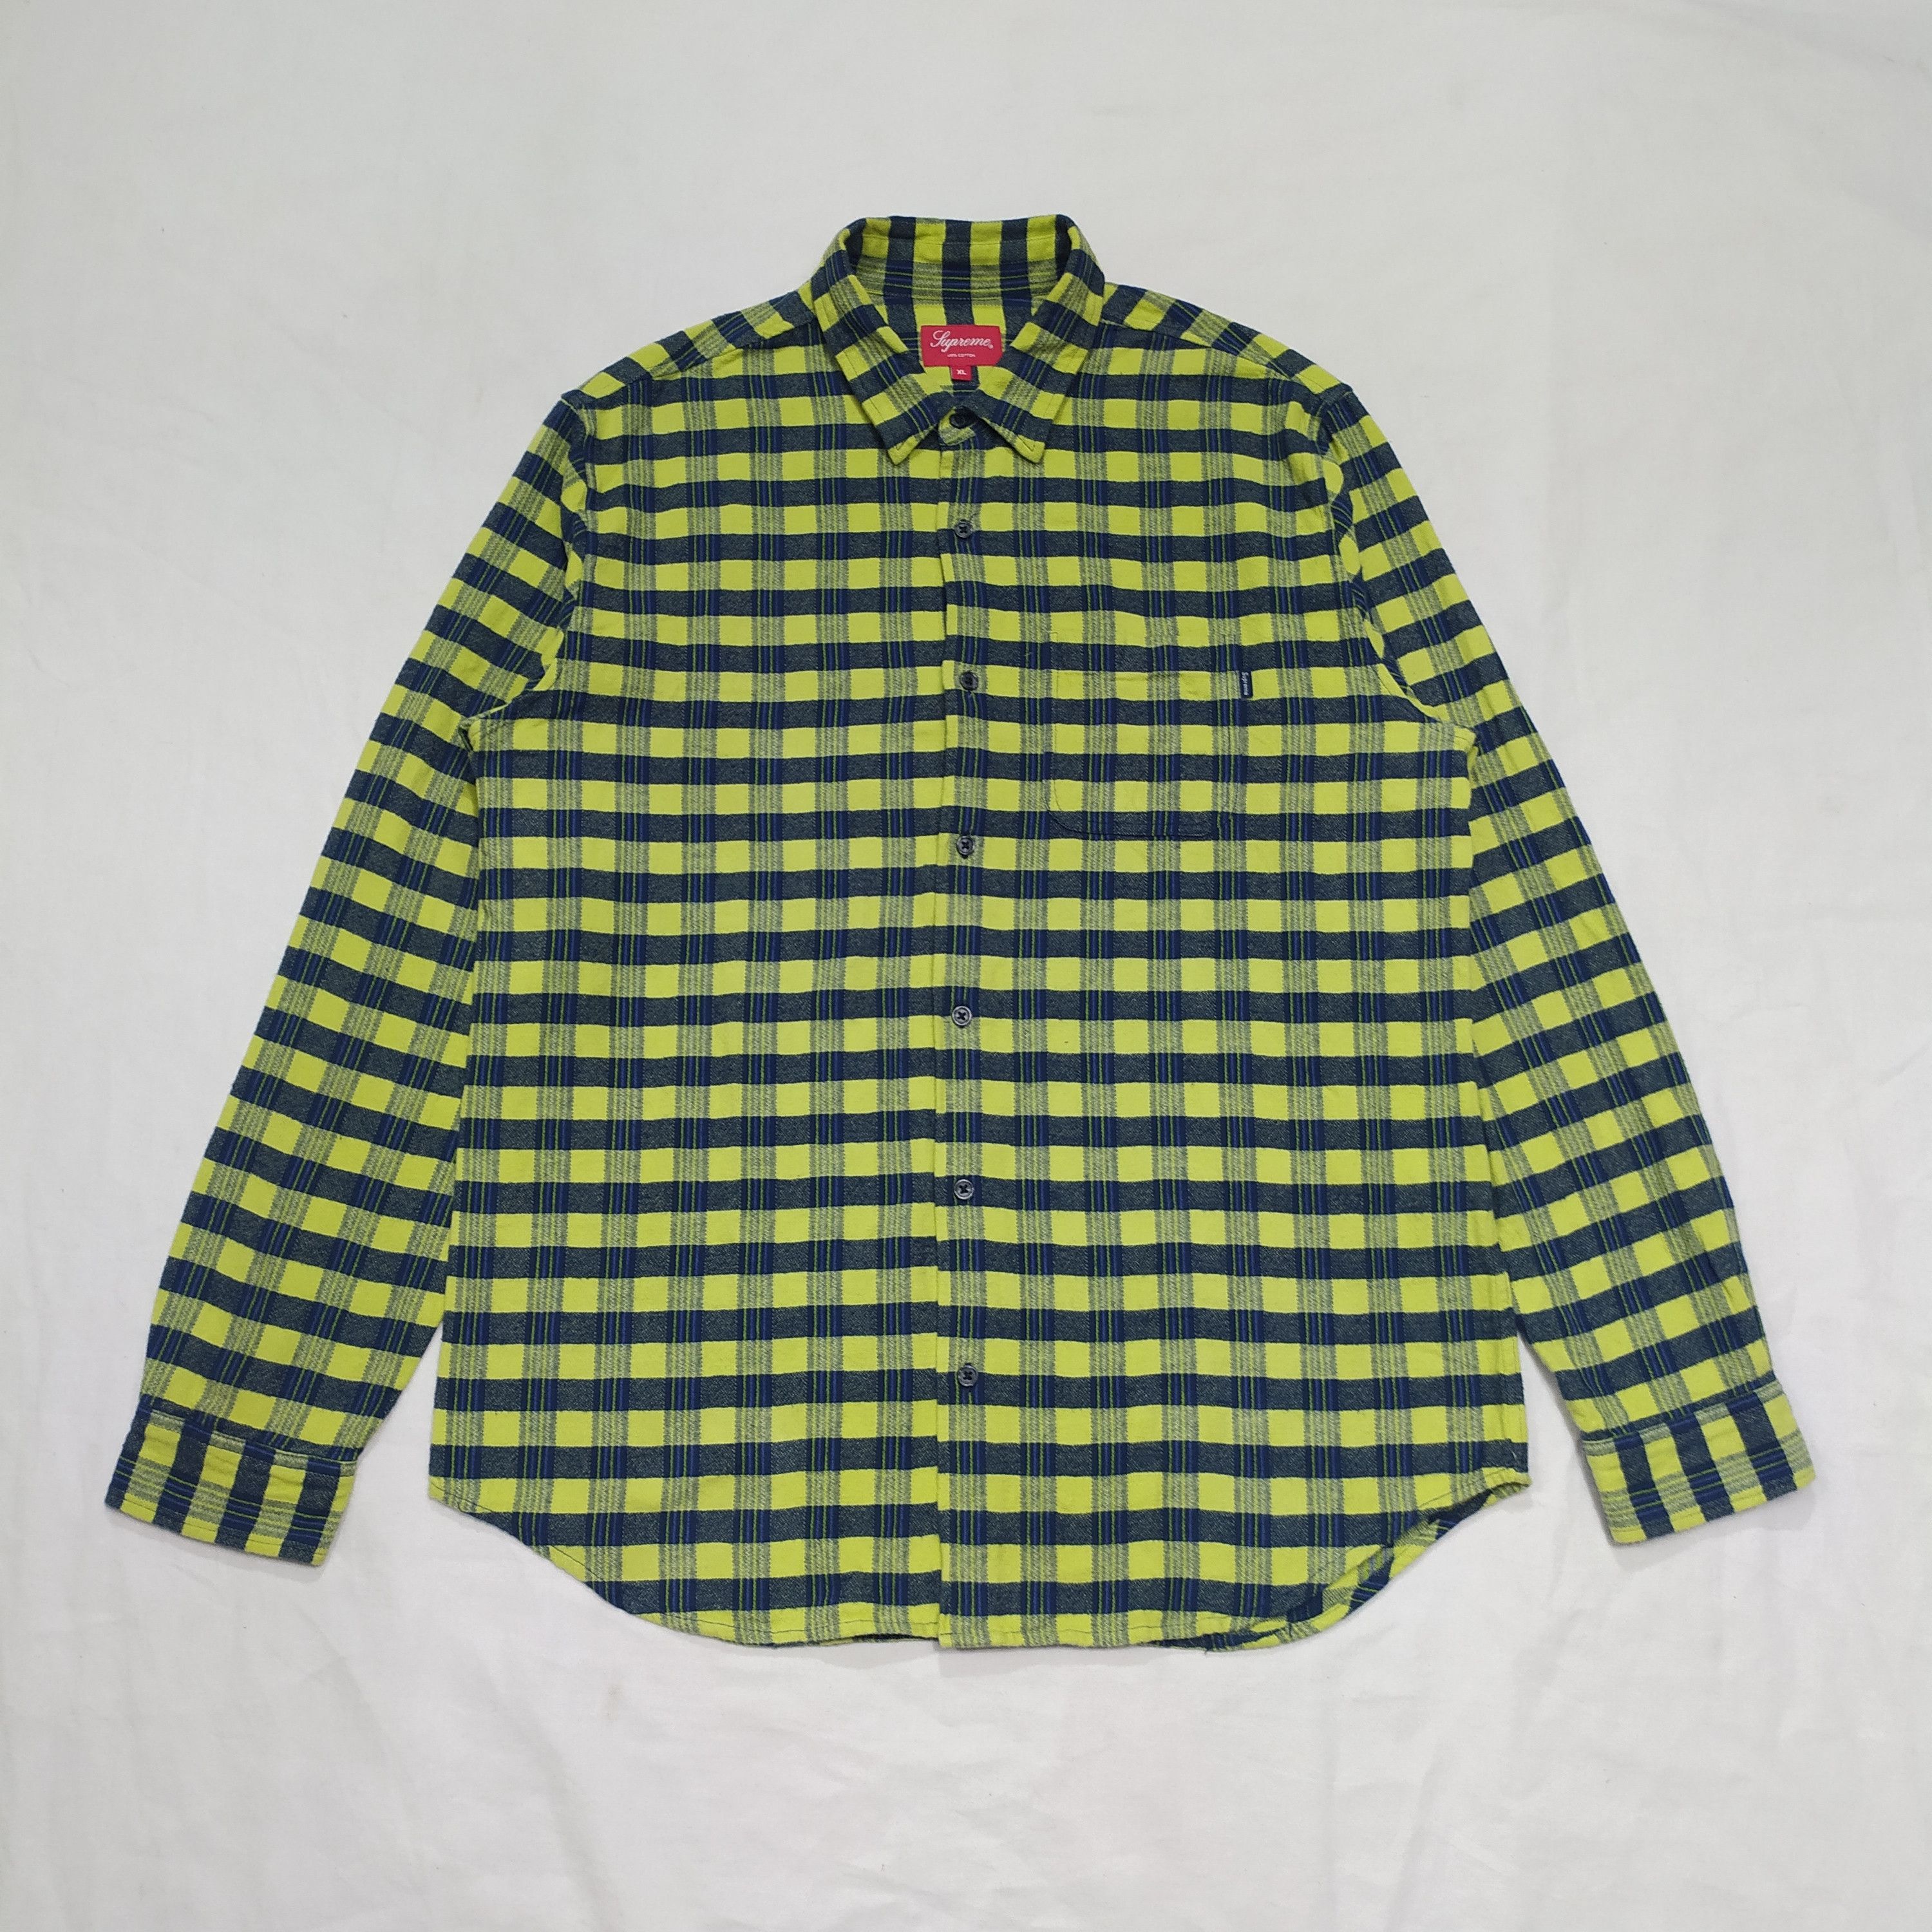 Supreme Supreme SS17 Plaid Flannel Shirt | Grailed